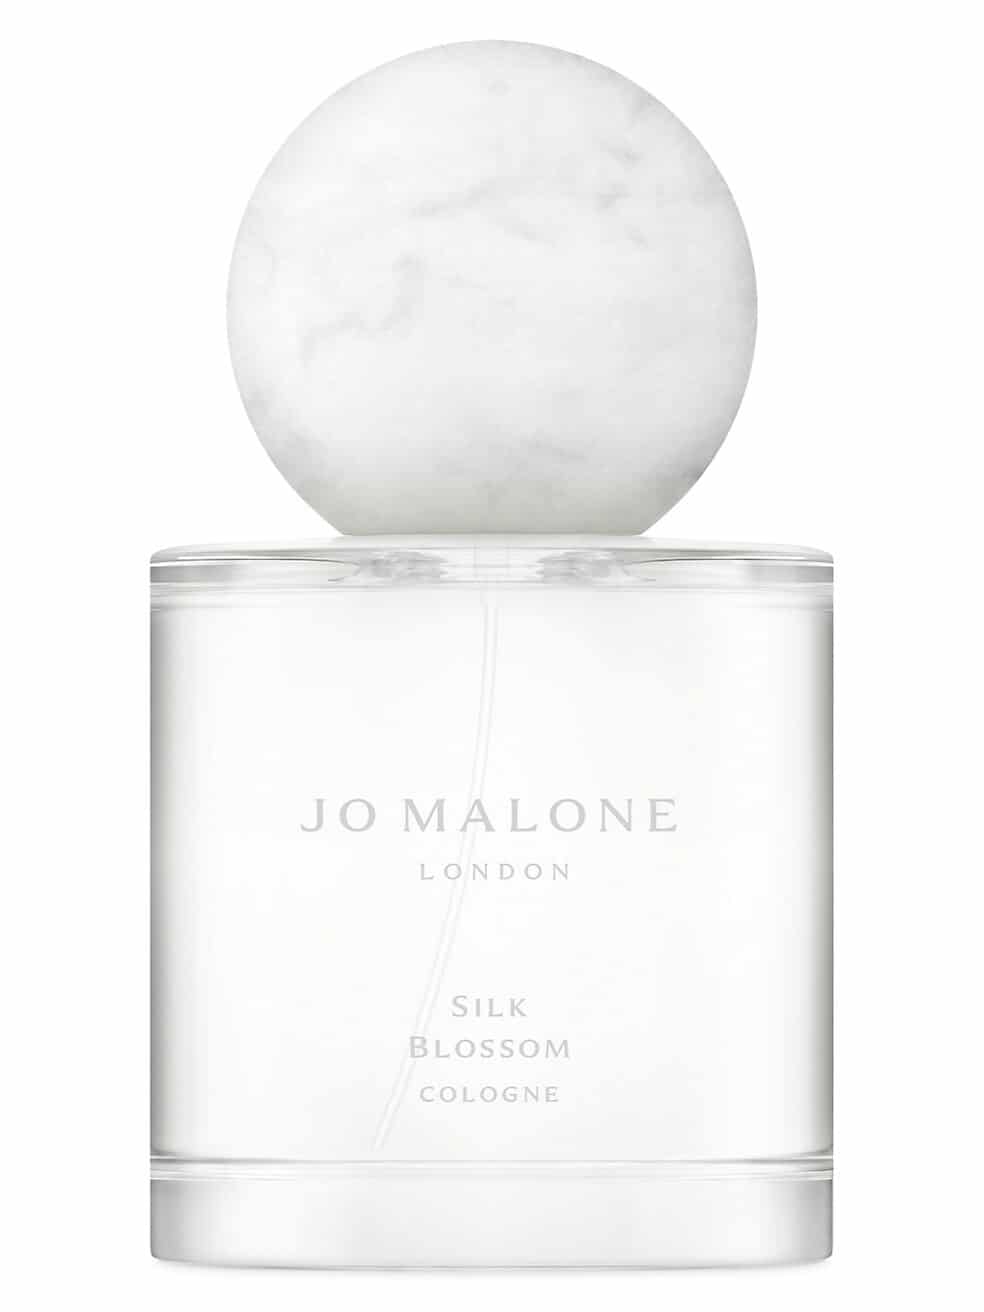 Jo Malone London Silk Blossom Cologne - saks fifth avenue - beauty - perfume - cologne